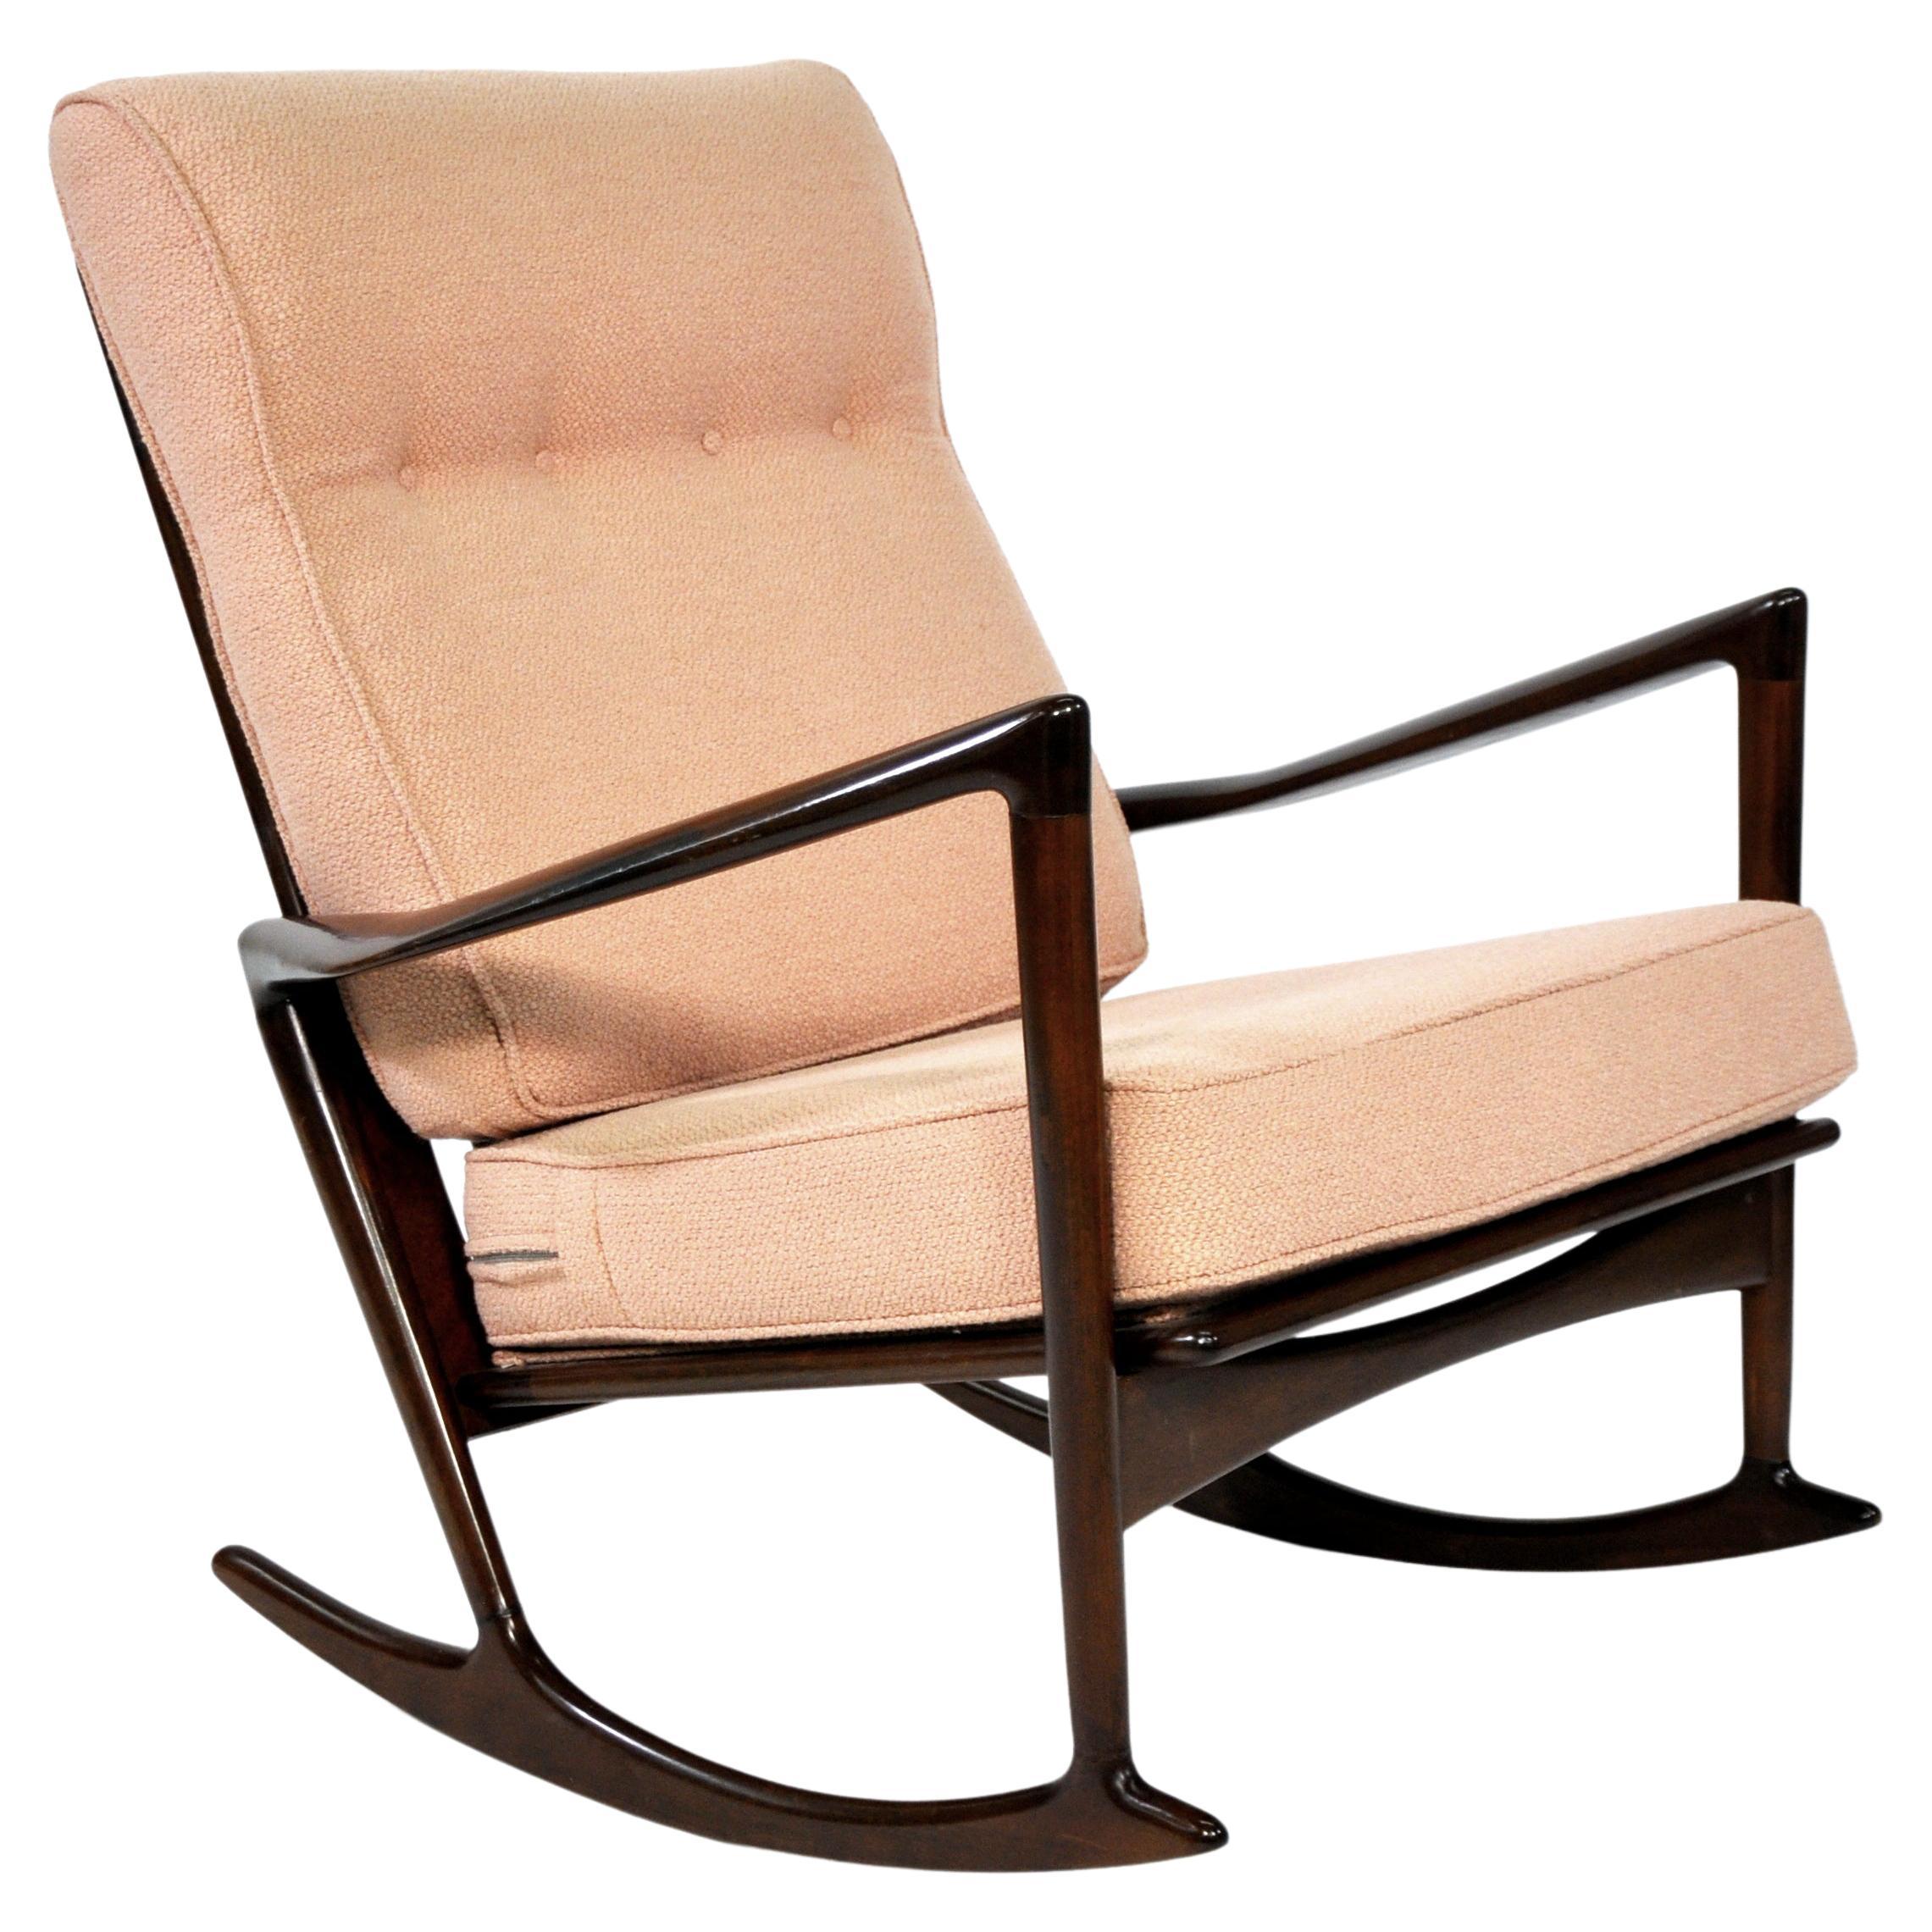 Ib Kofod-Larsen Sculptural Rocking Chair for Selig, Denmark, 1960s